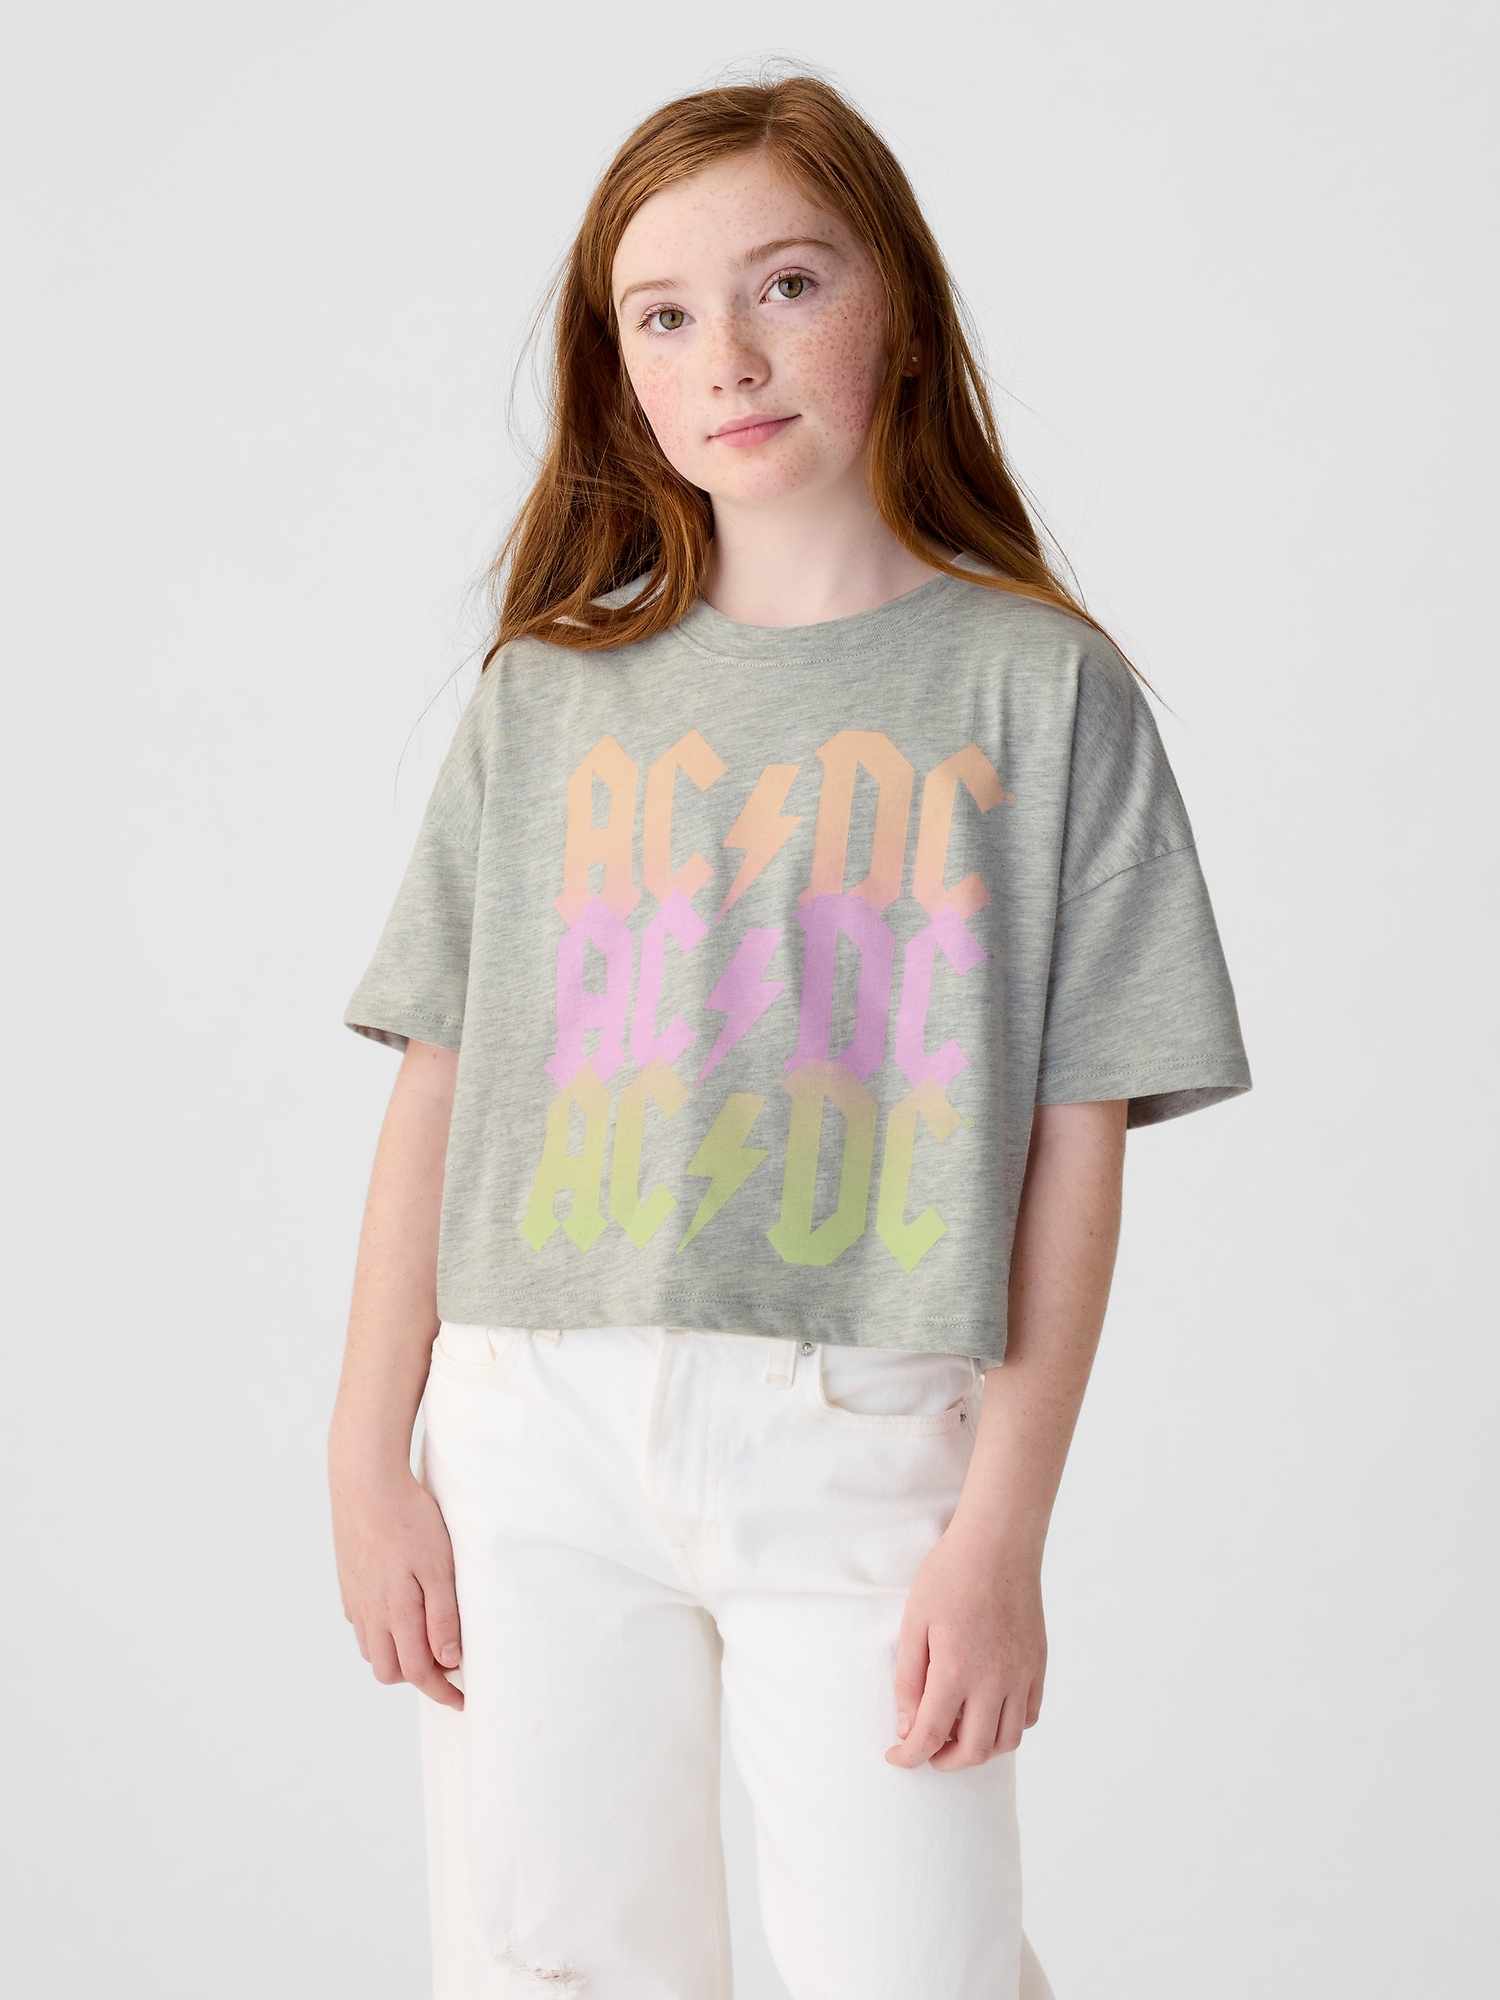 Kids Band Graphic T-Shirt